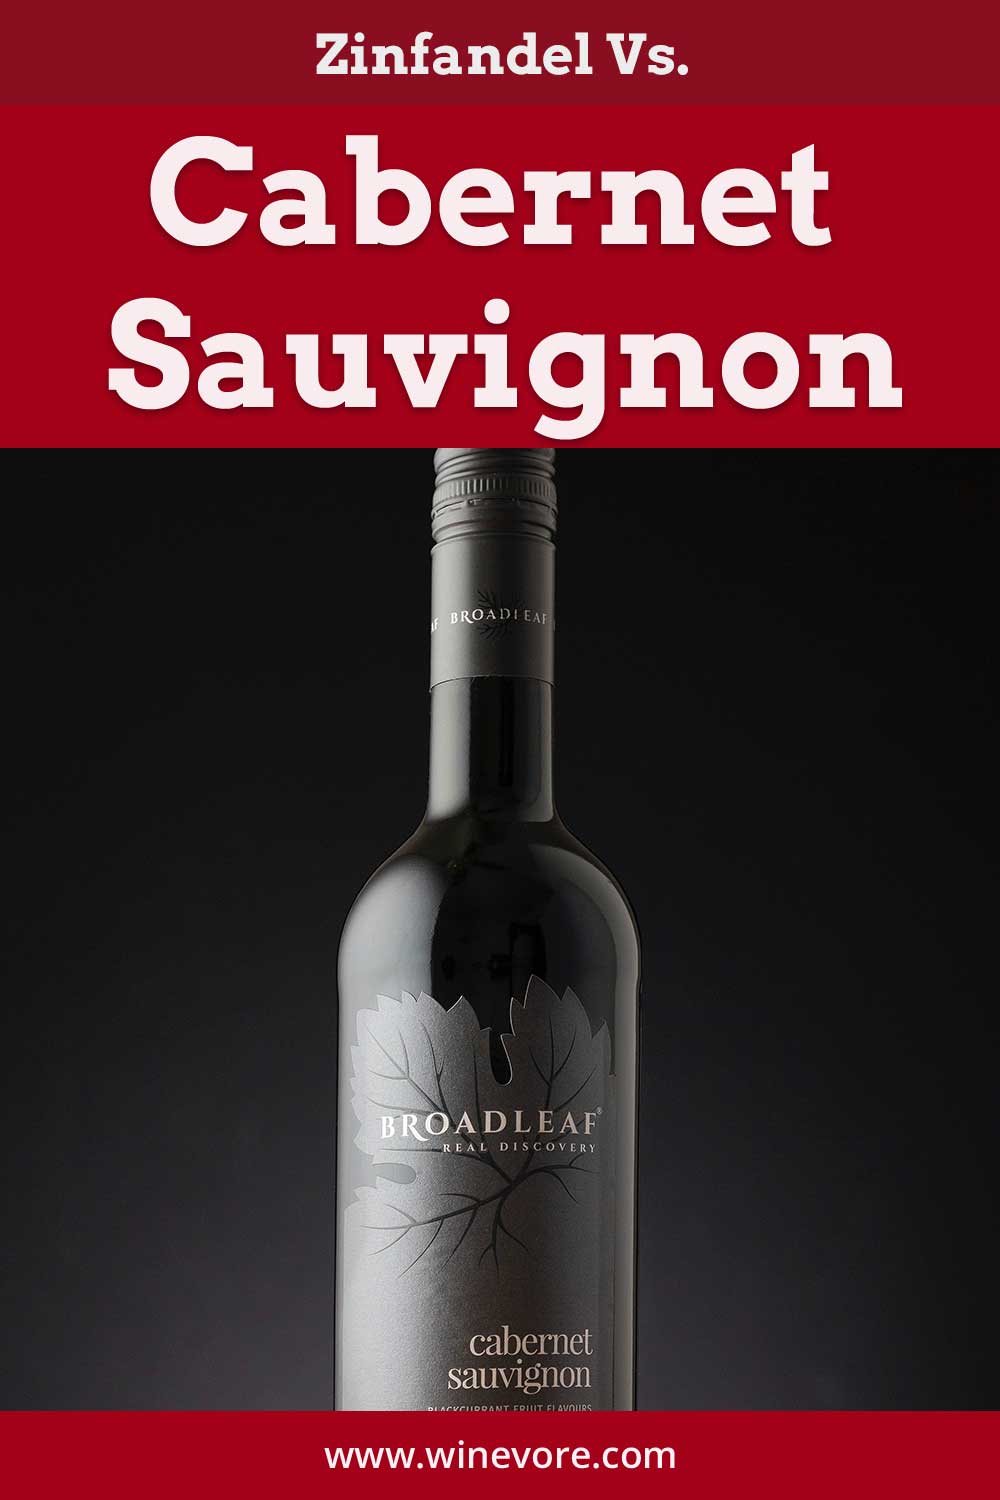 A bottle of wine in front of black background - Zinfandel Vs. Cabernet Sauvignon.